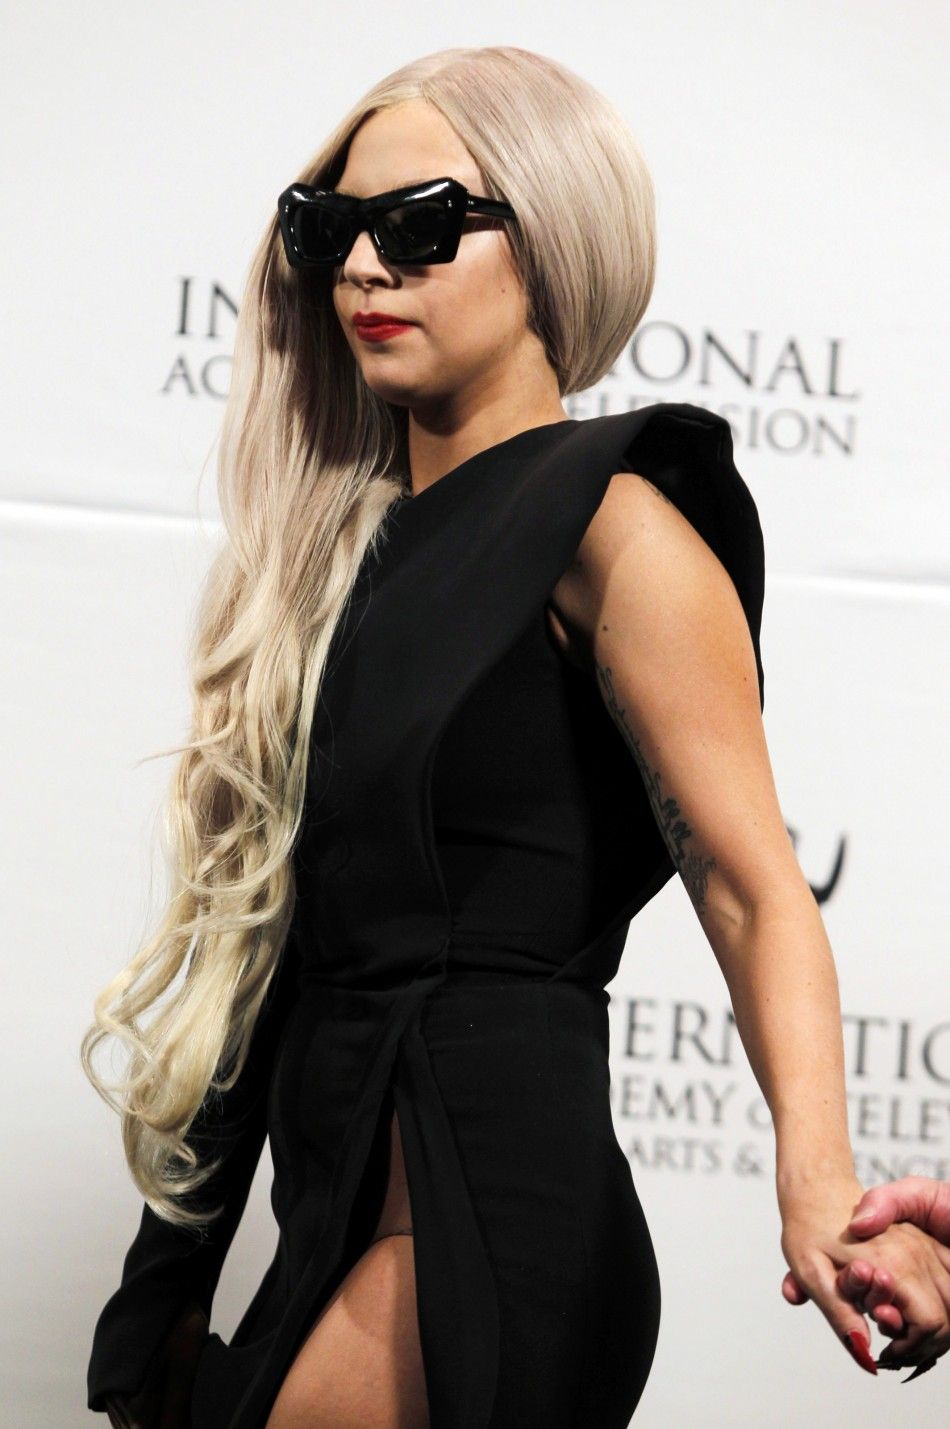 Singer Lady Gaga at International Emmy Awards